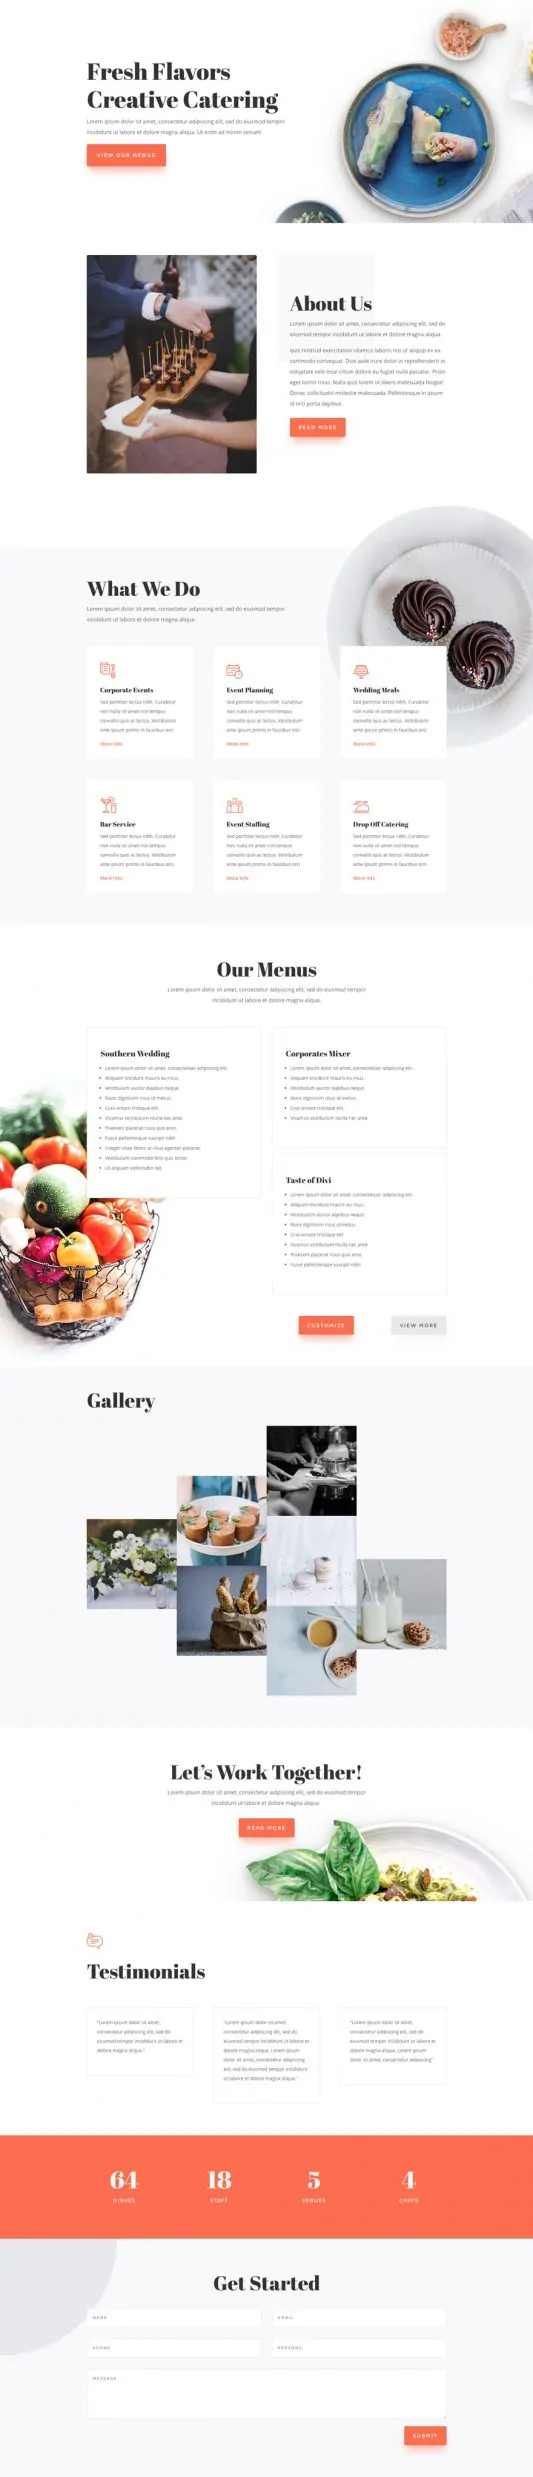 Food Catering Web Design 5